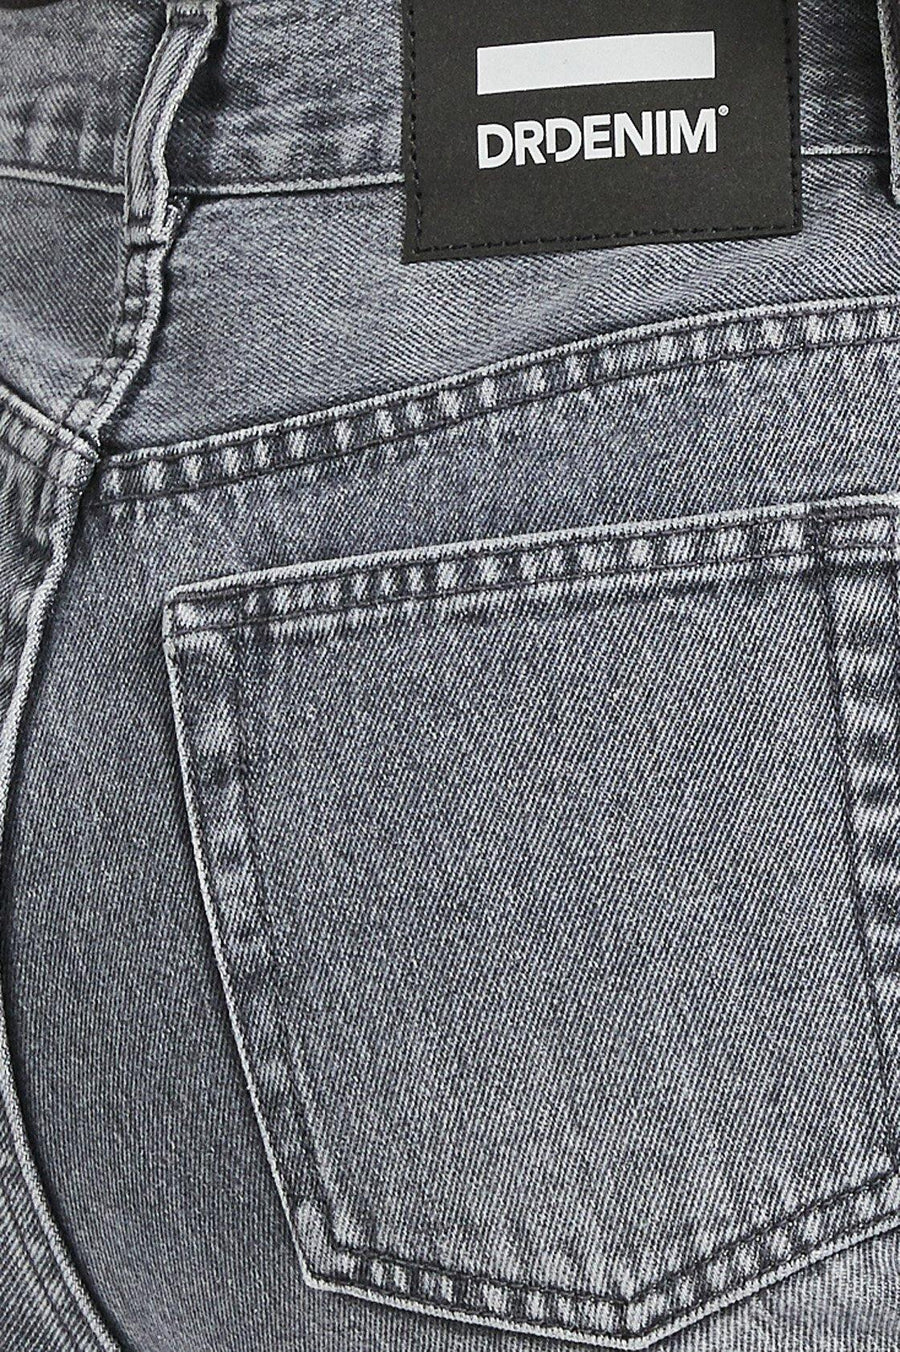 Nora Jeans - Washed Grey - Dr Denim Jeans - Australia & NZ